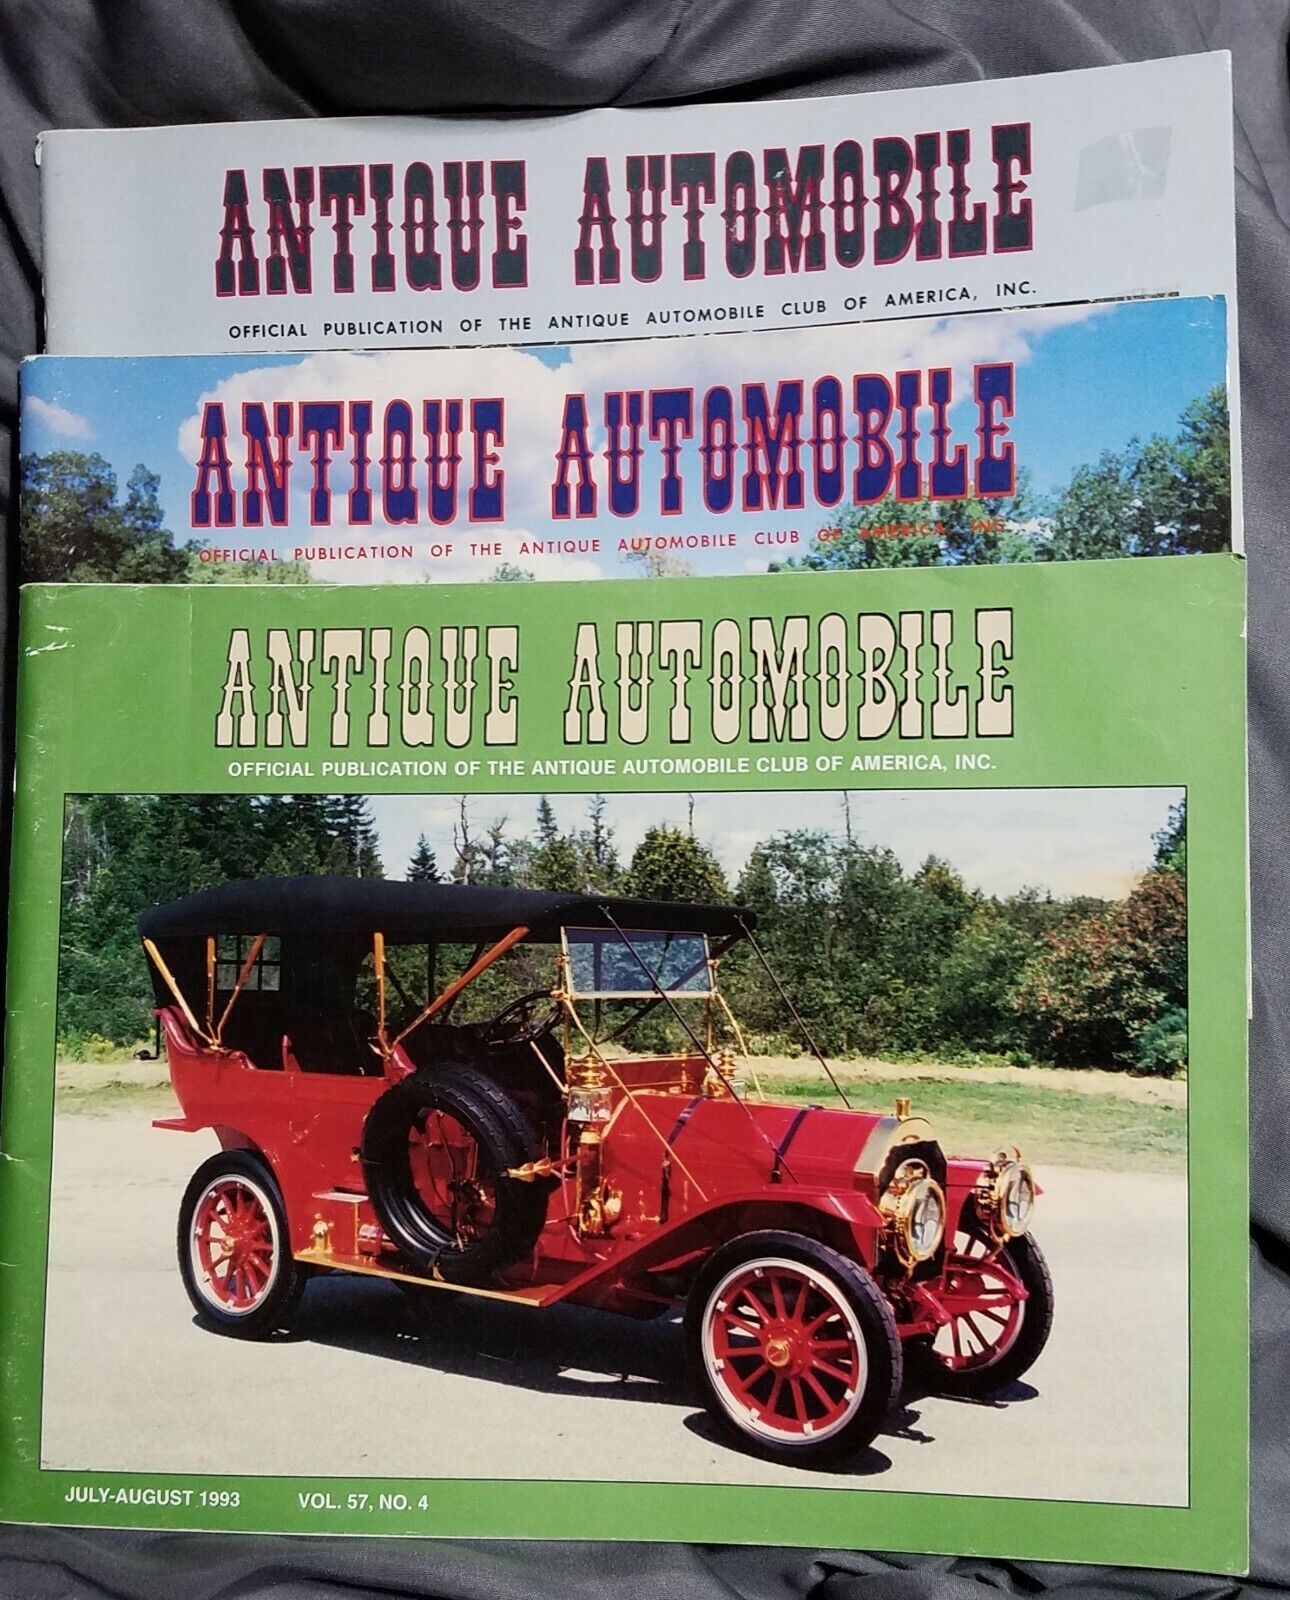 Antique Automobile Official Publication Of The Antique Auto Club Of America, x3